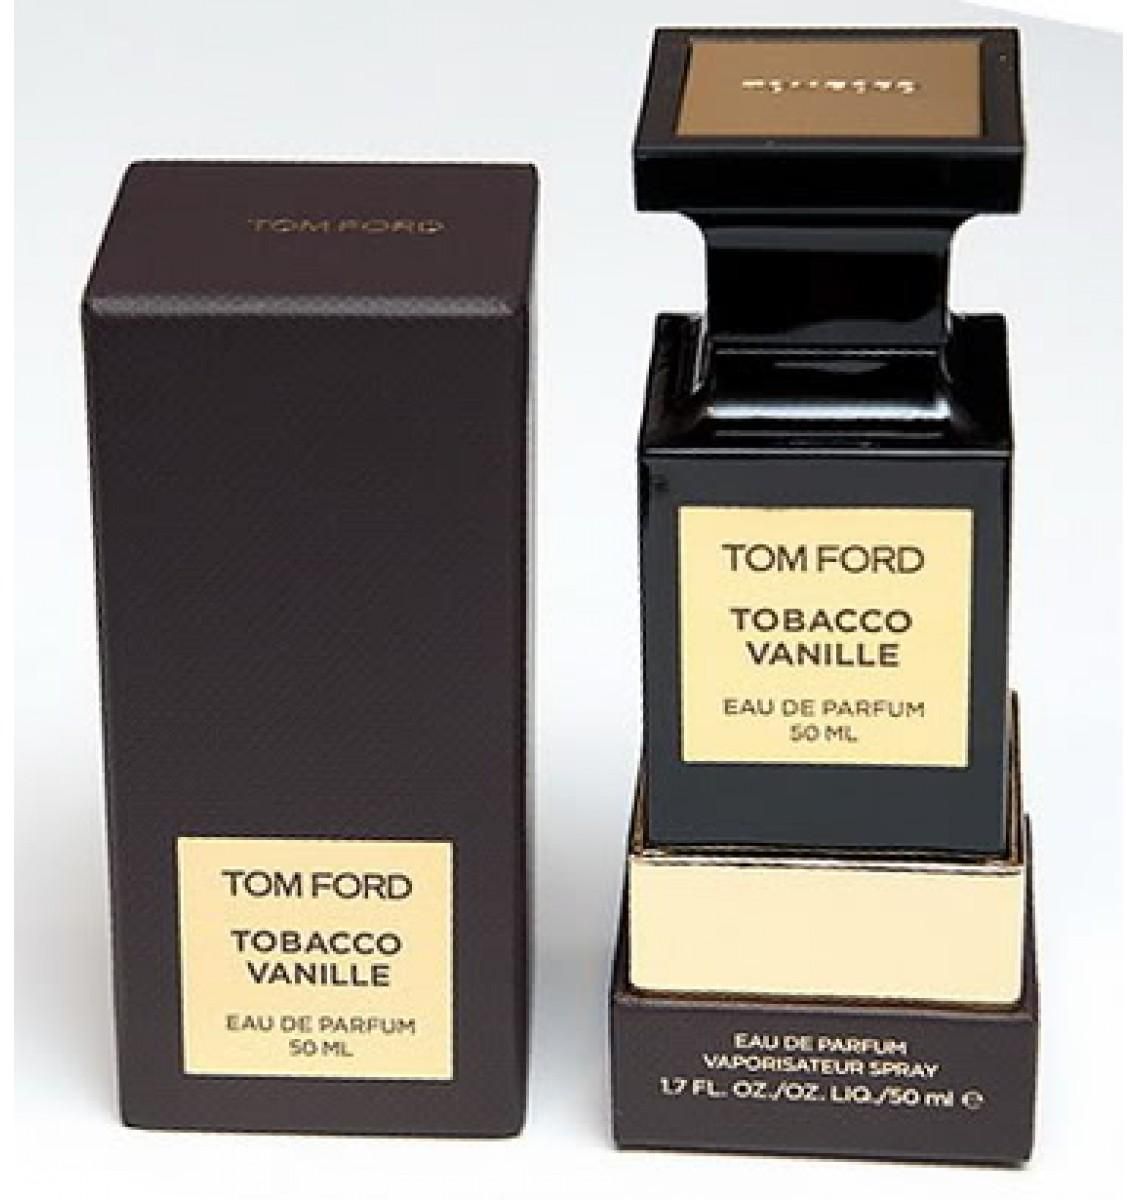 Tom Ford Tobacco Vanille EDP 50ml For Men price from fragrances in